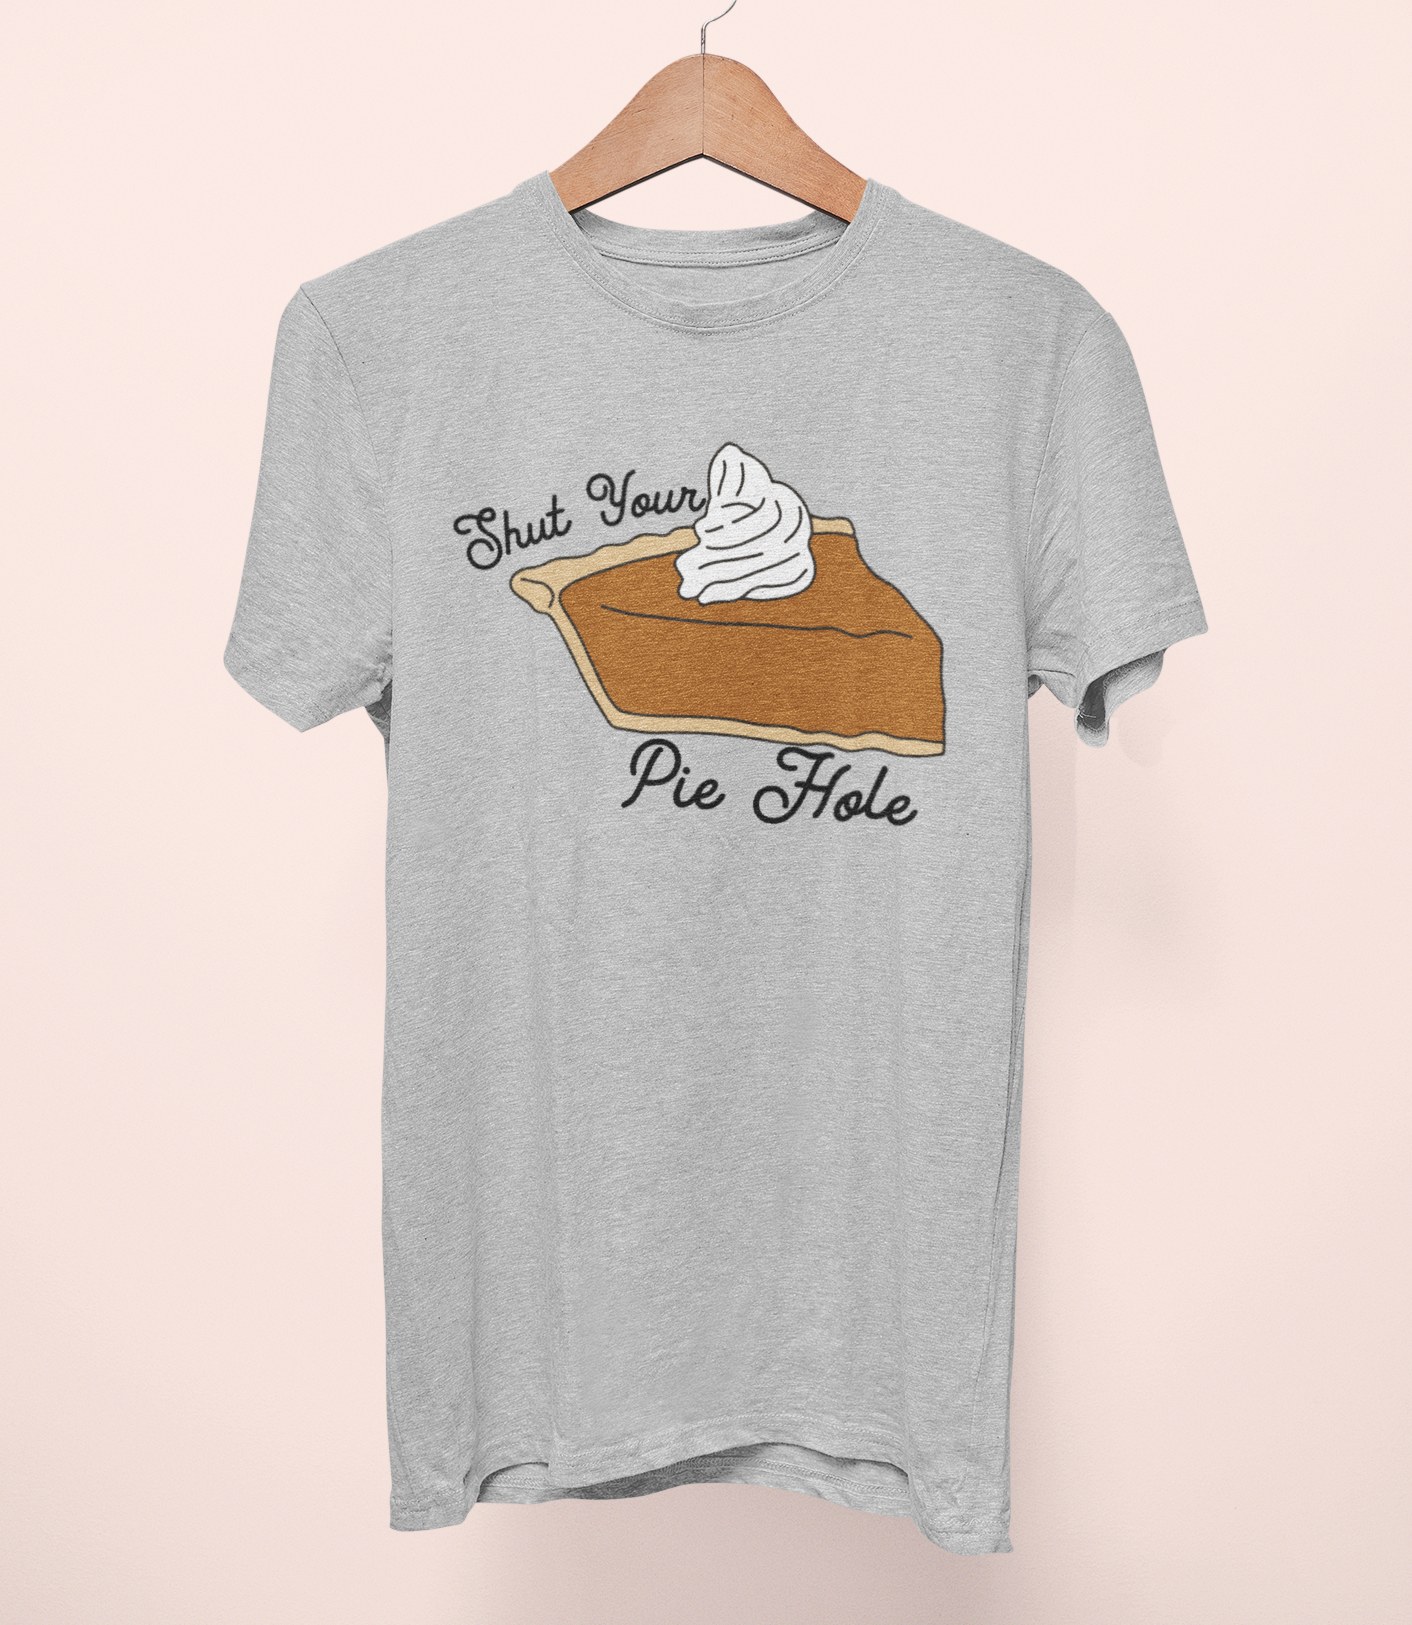 Grey shirt with a pie saying shut your pie hole - HighCiti